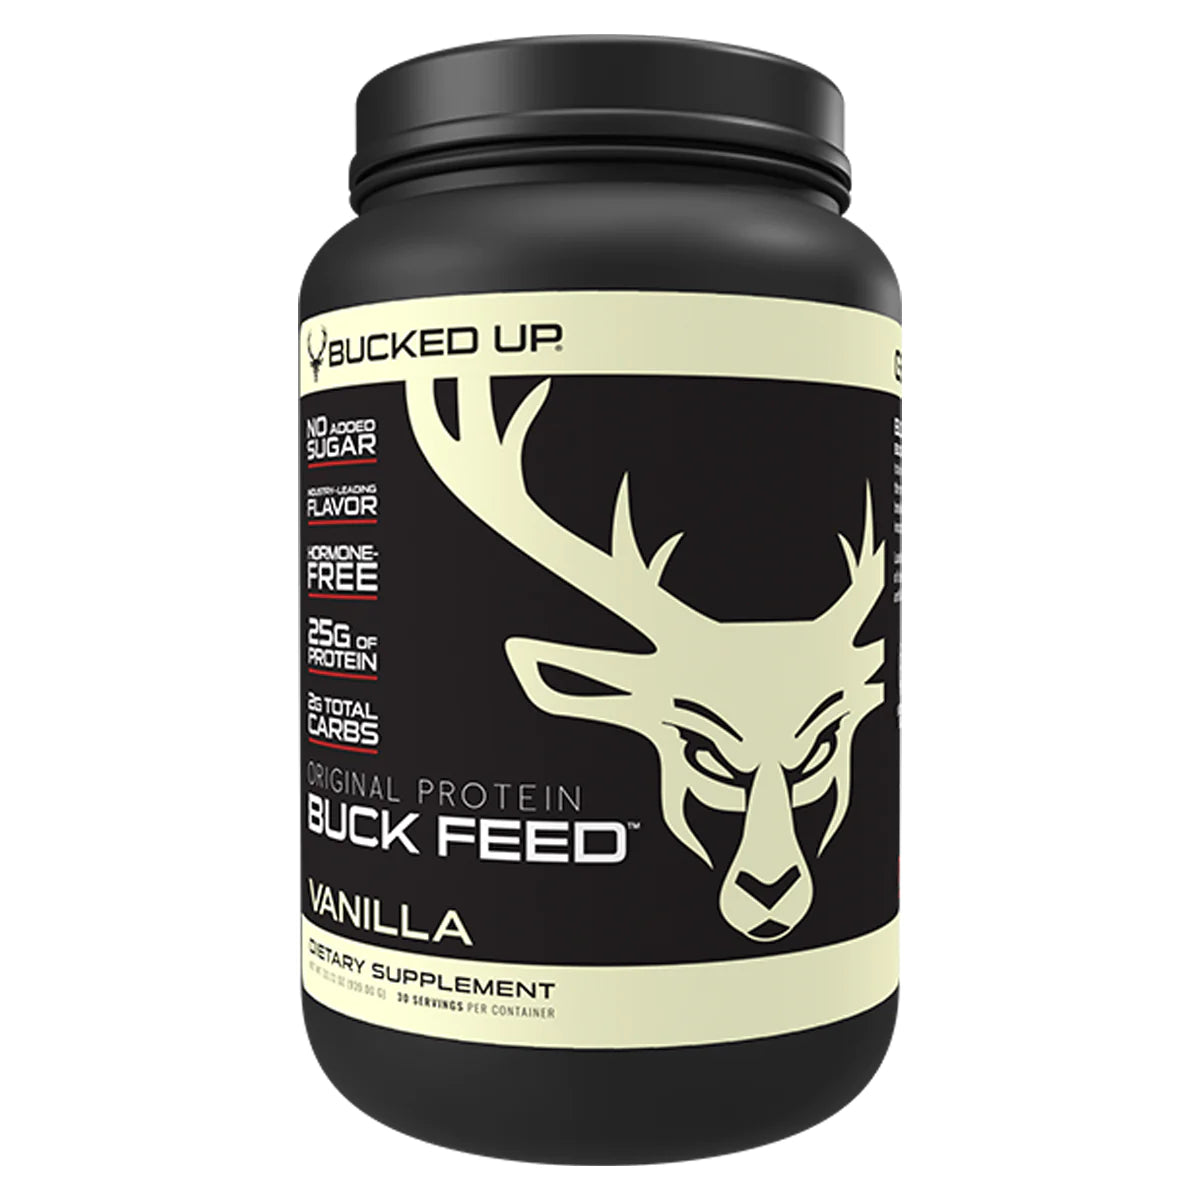 Bucked-Up Buck Feed ORIGINAL Protein (Vanilla)